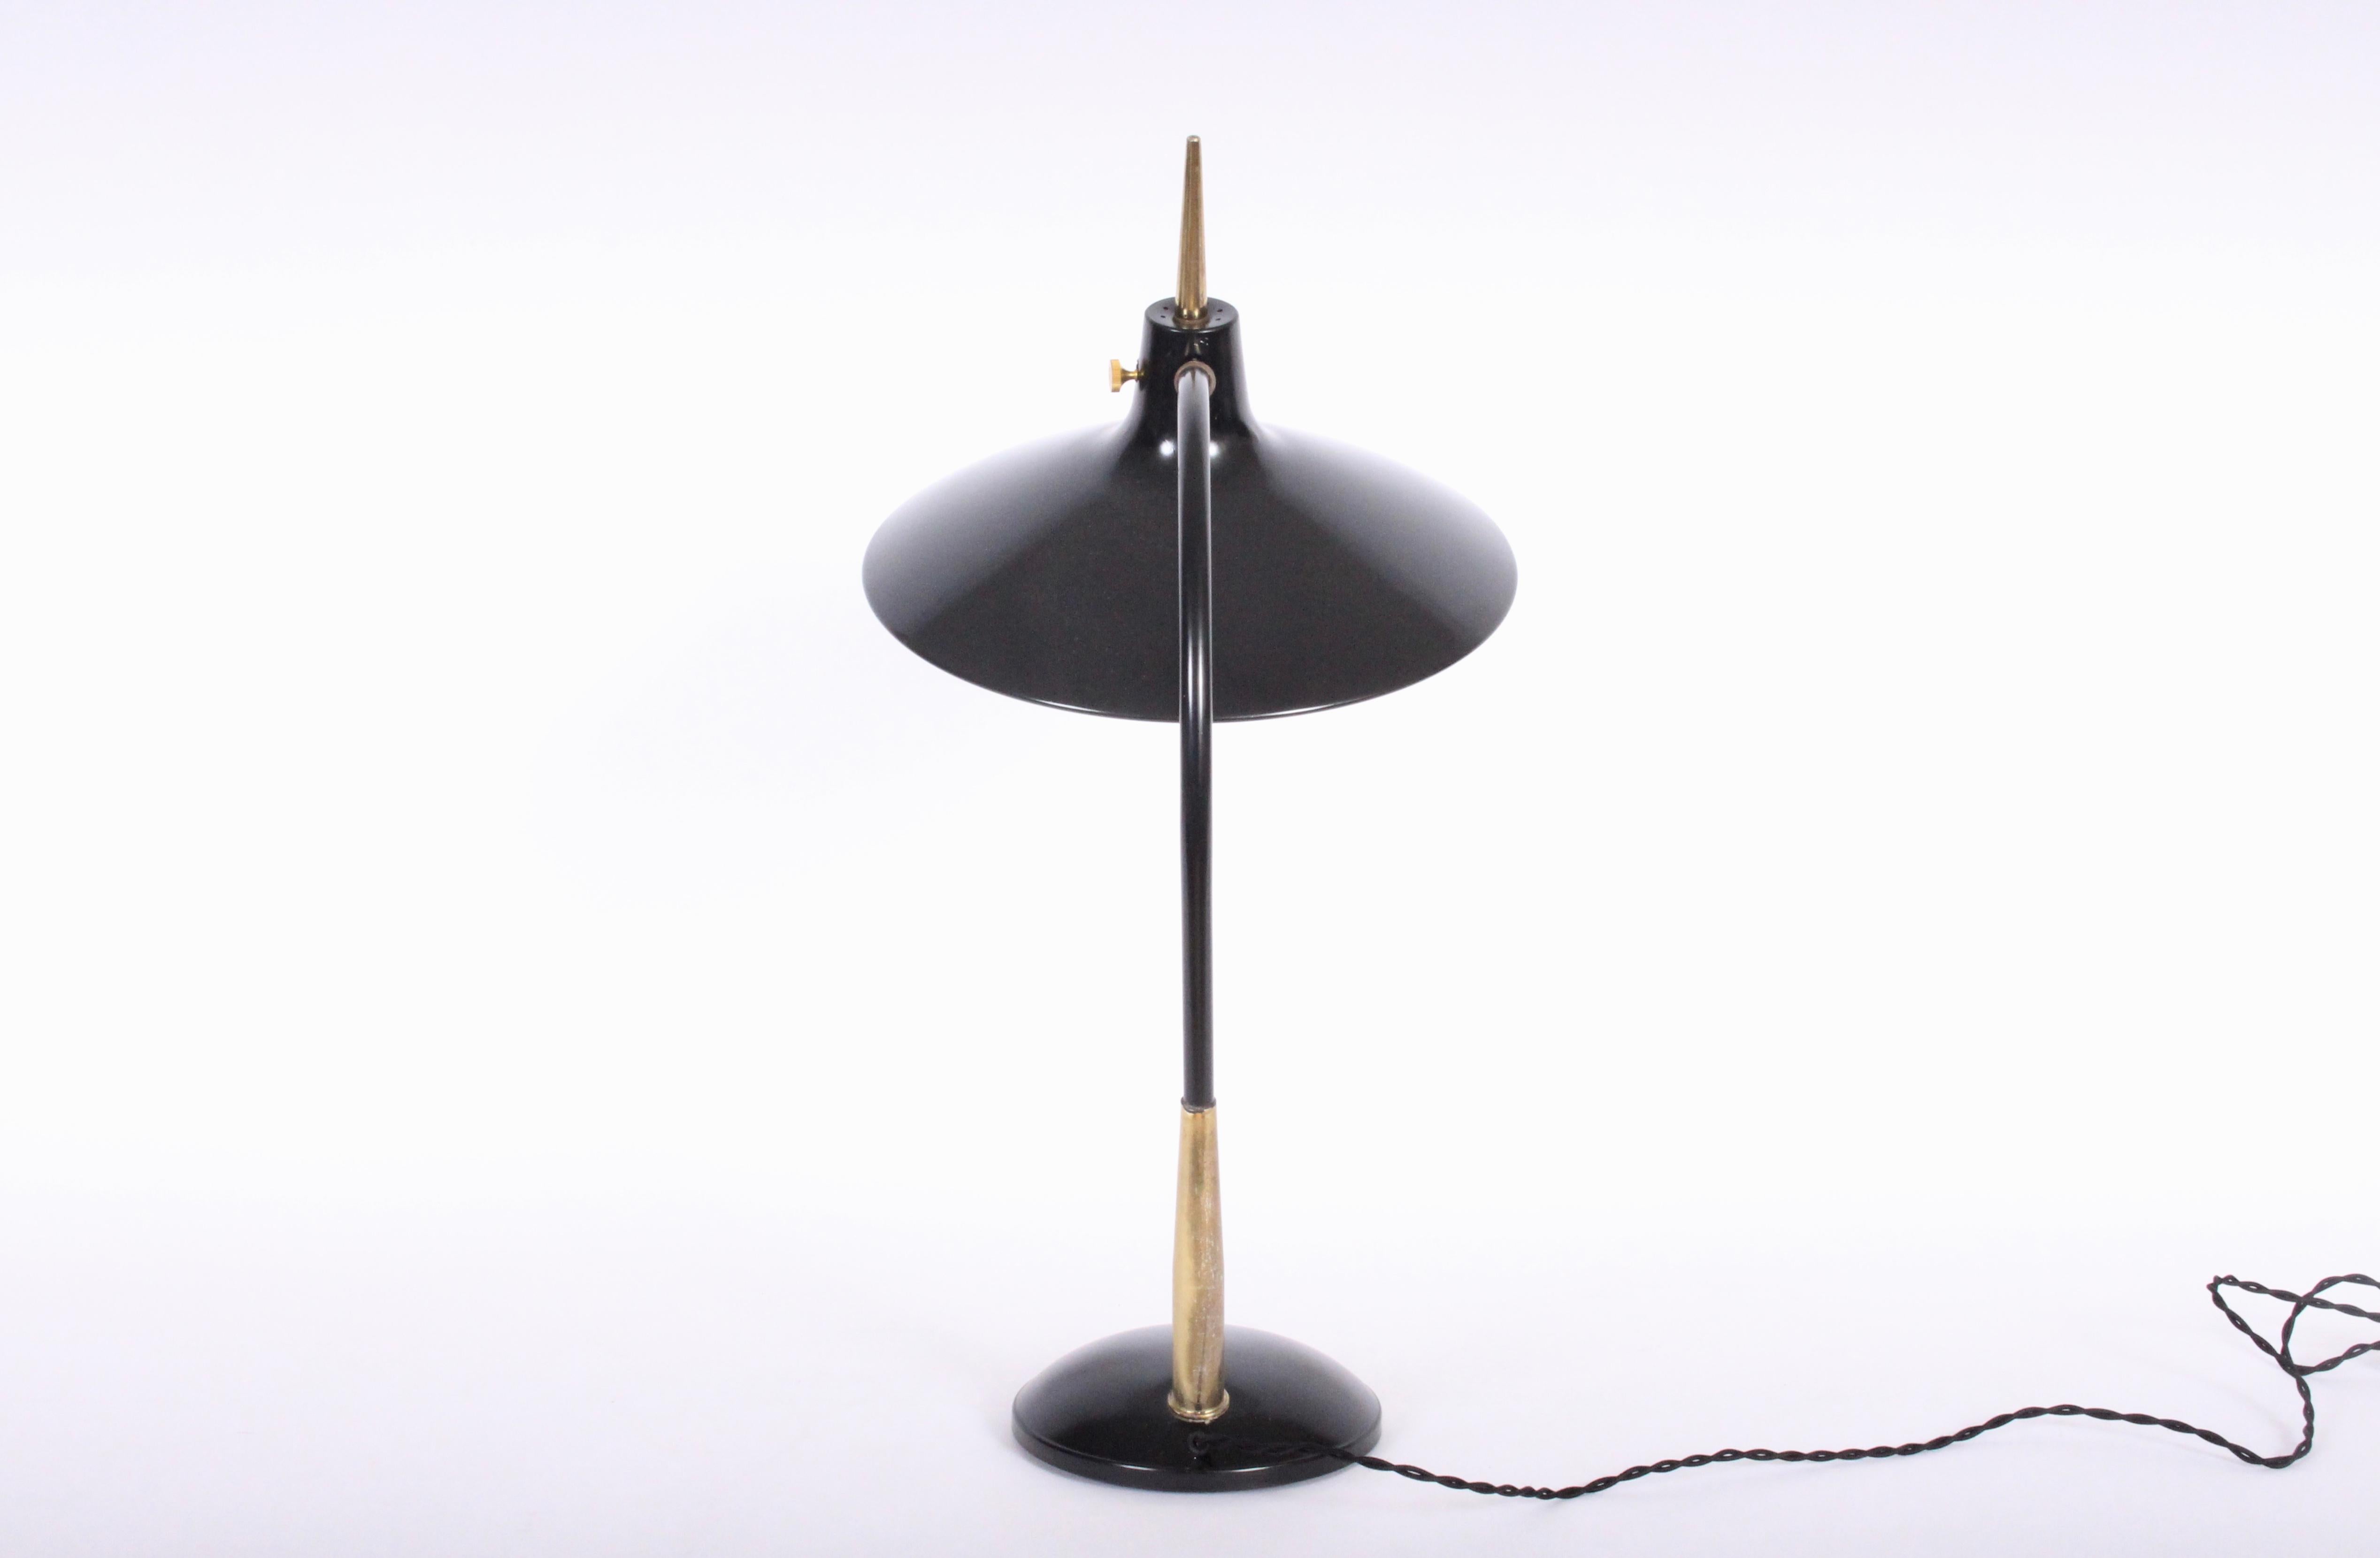 American Laurel Lamp Mfg. Co. Black and Brass Desk Lamp with Black Enamel Shade